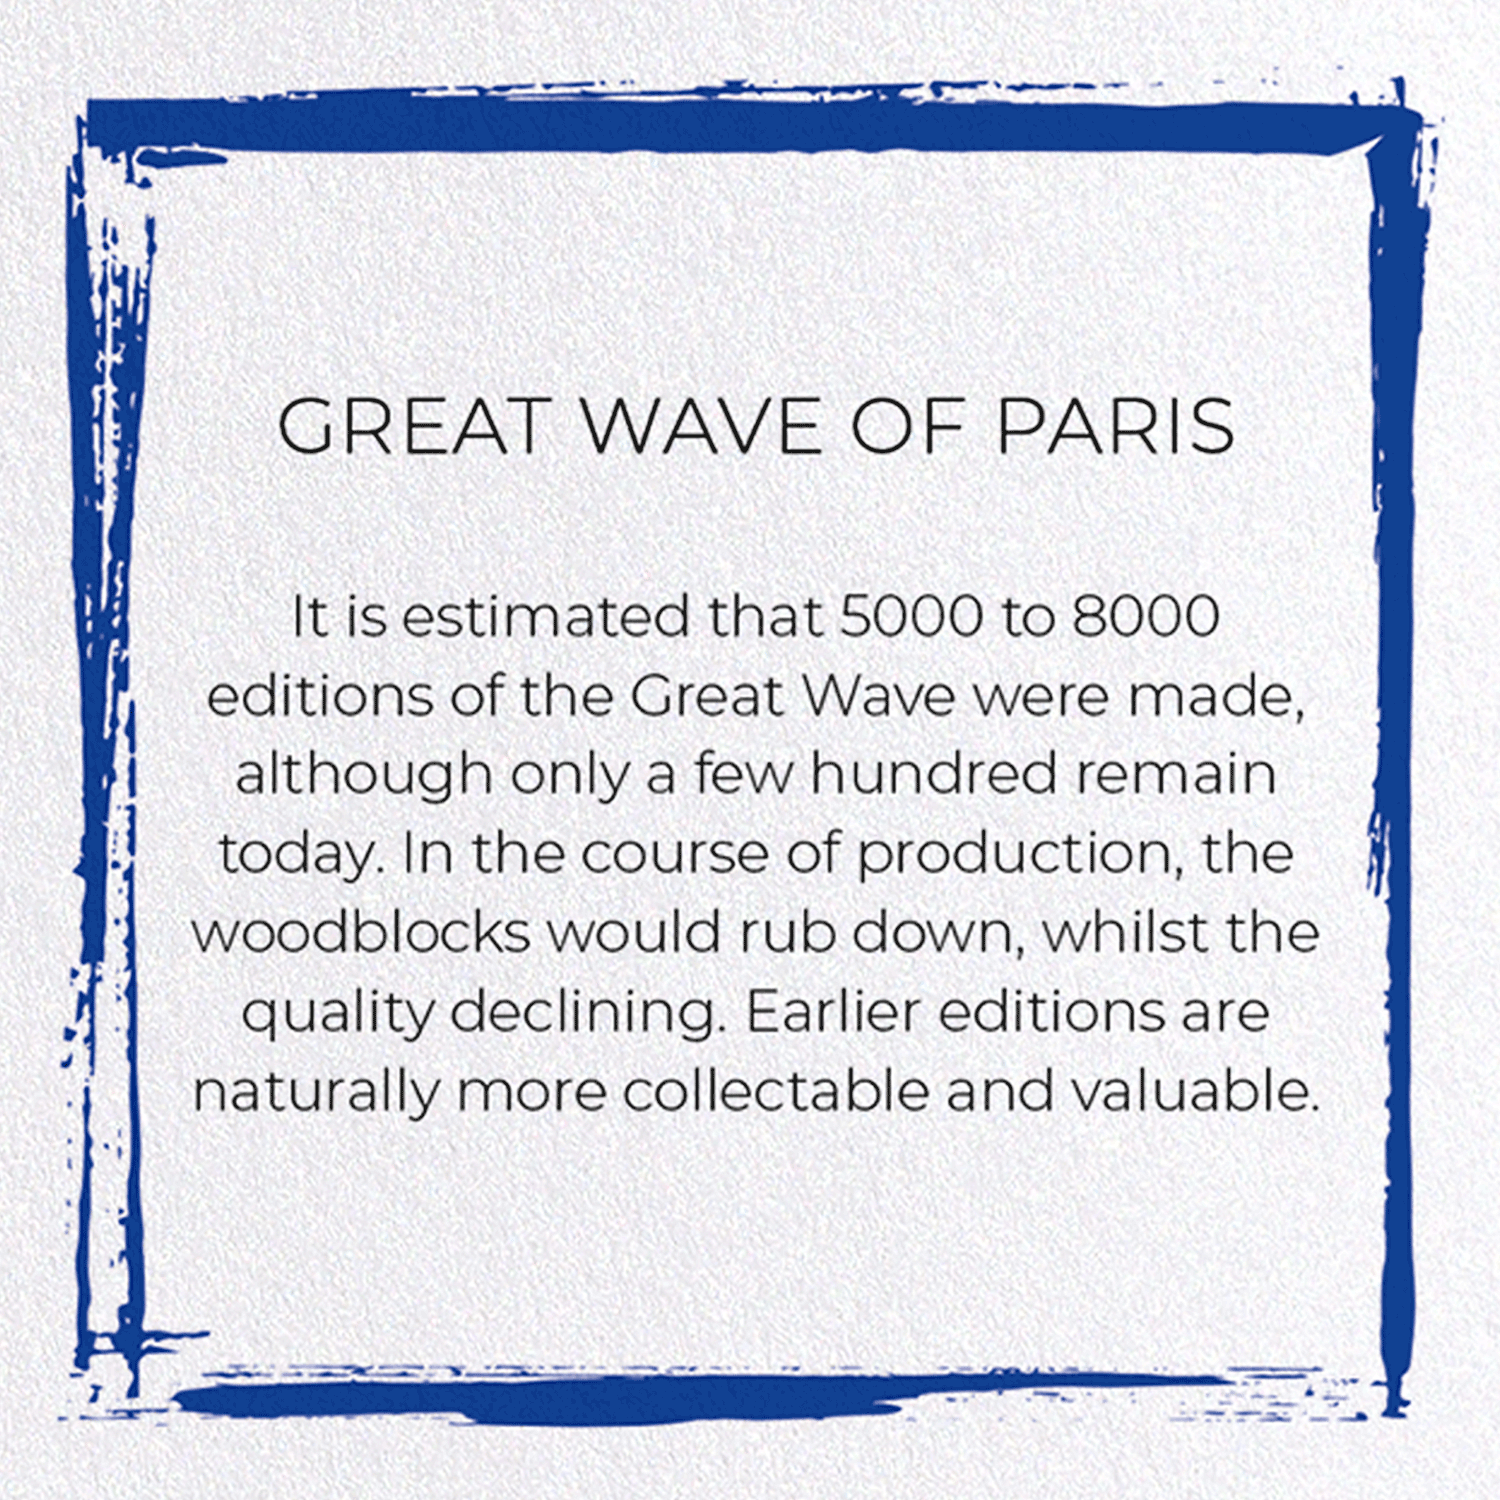 GREAT WAVE OF PARIS